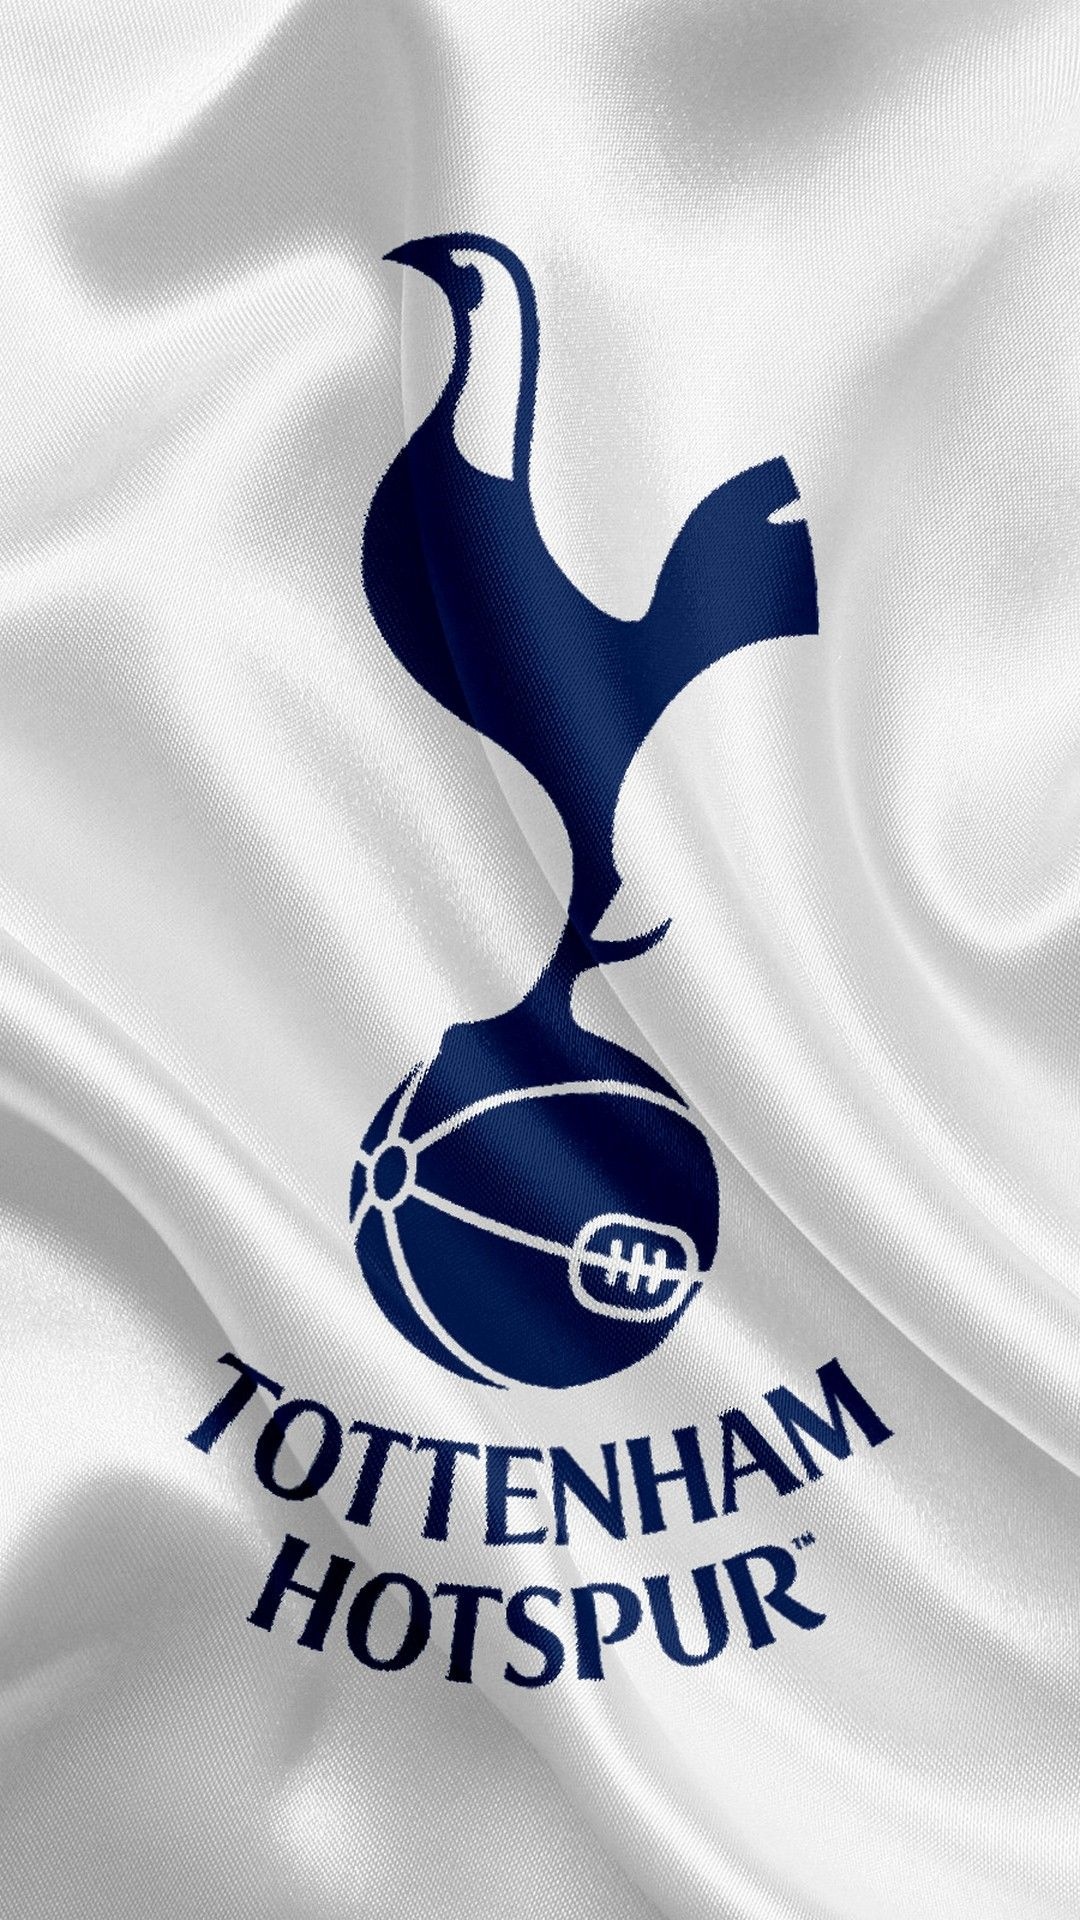 Tottenham Hotspur FC: A football club based in North London, England. 1080x1920 Full HD Wallpaper.